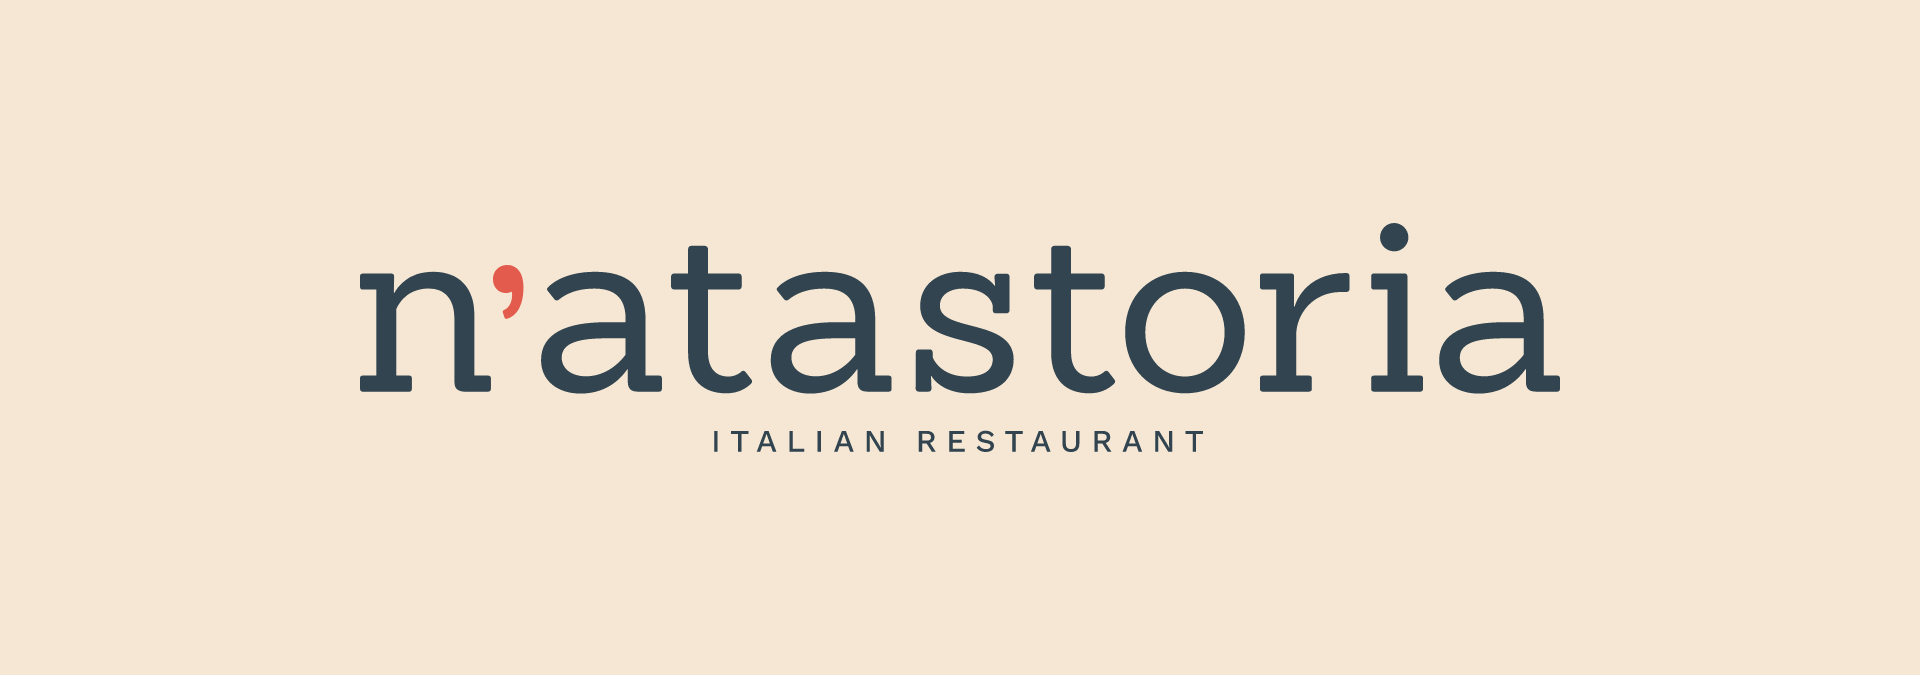 Natastoria Logo